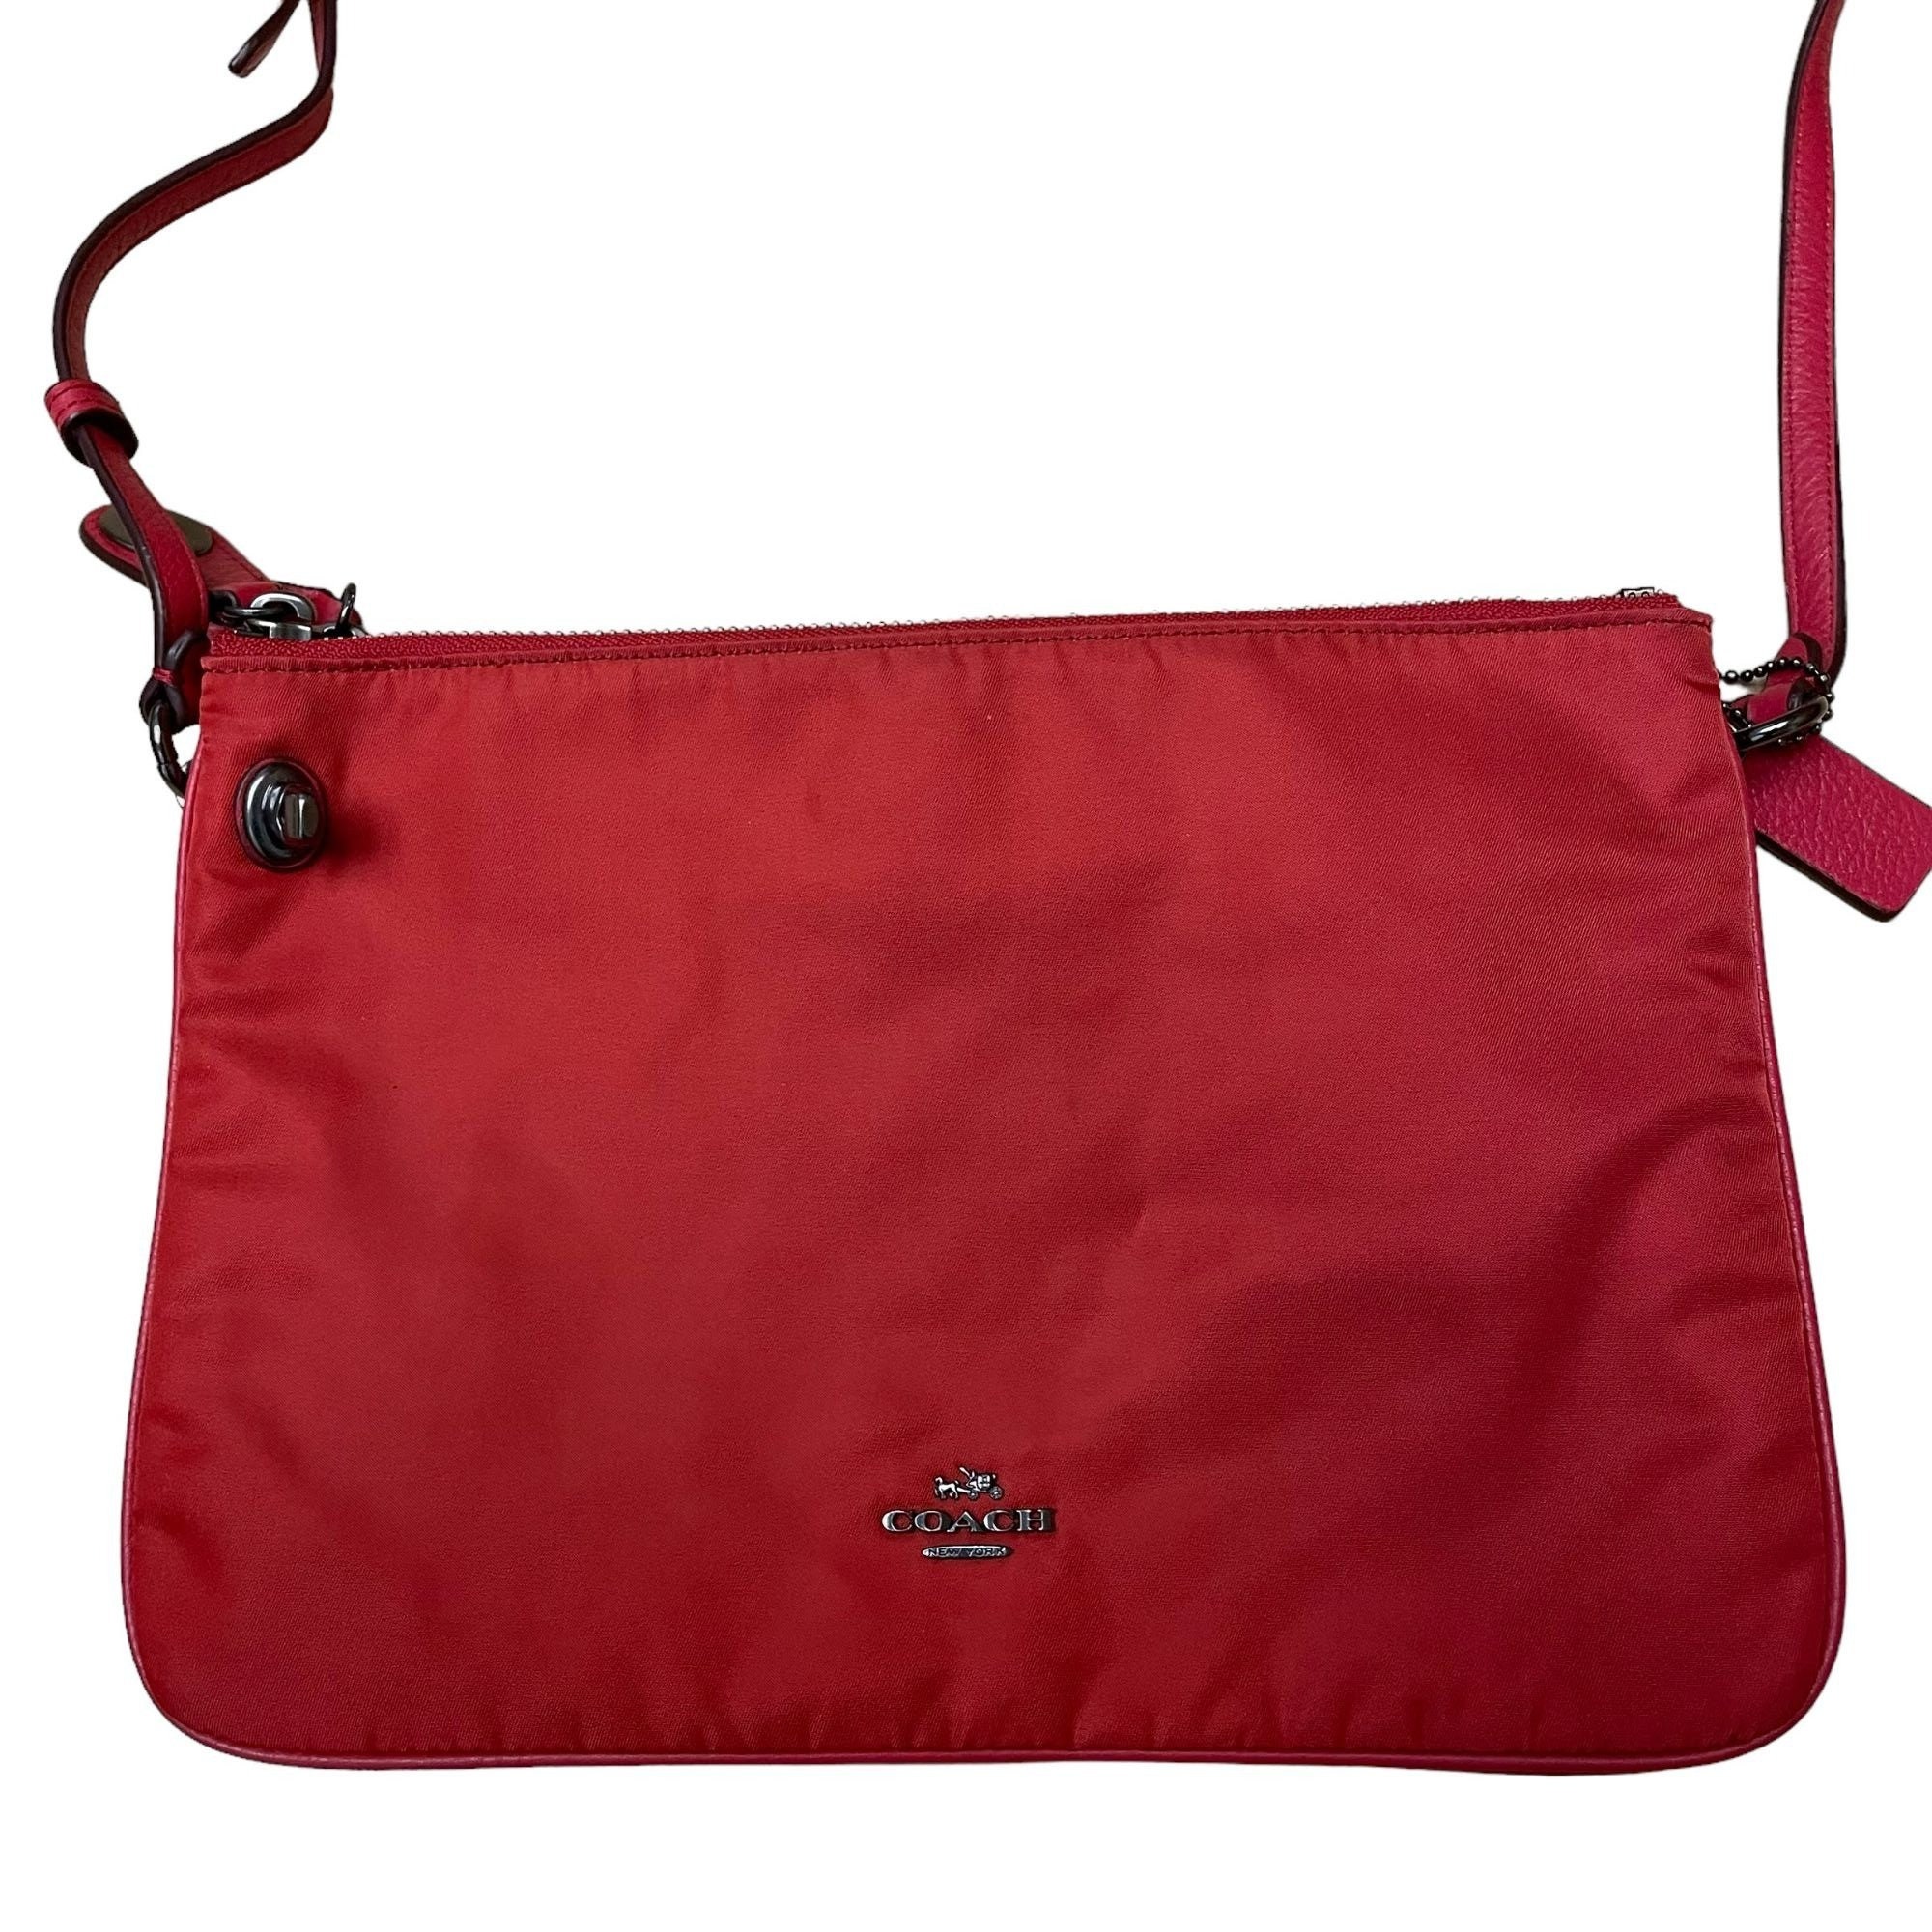 Red Coach Handbags